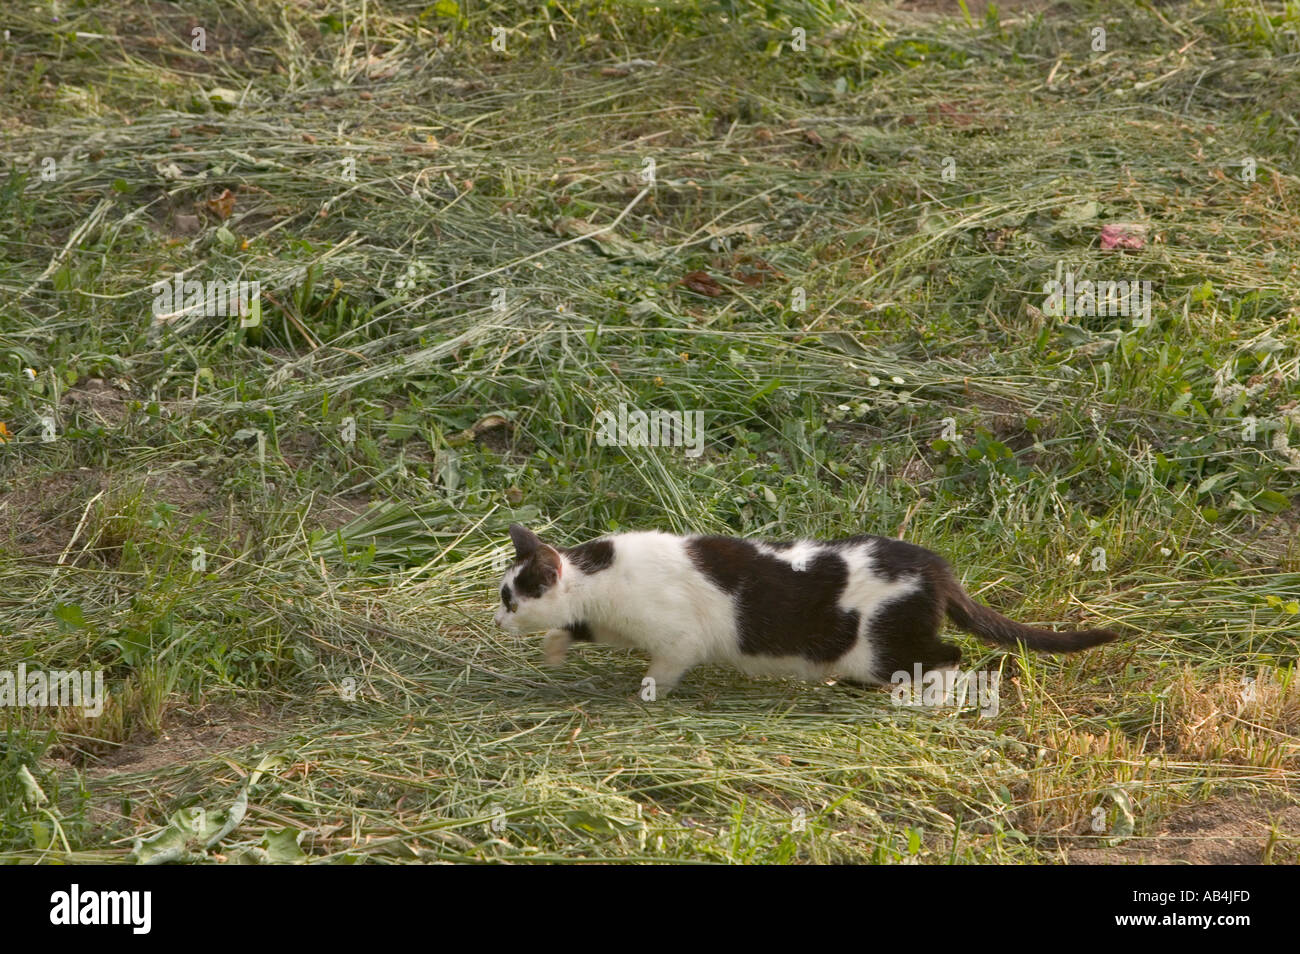 Un gato cazando en una pradera de heno segado posada de Valdeon Picos de Europa españa Foto de stock